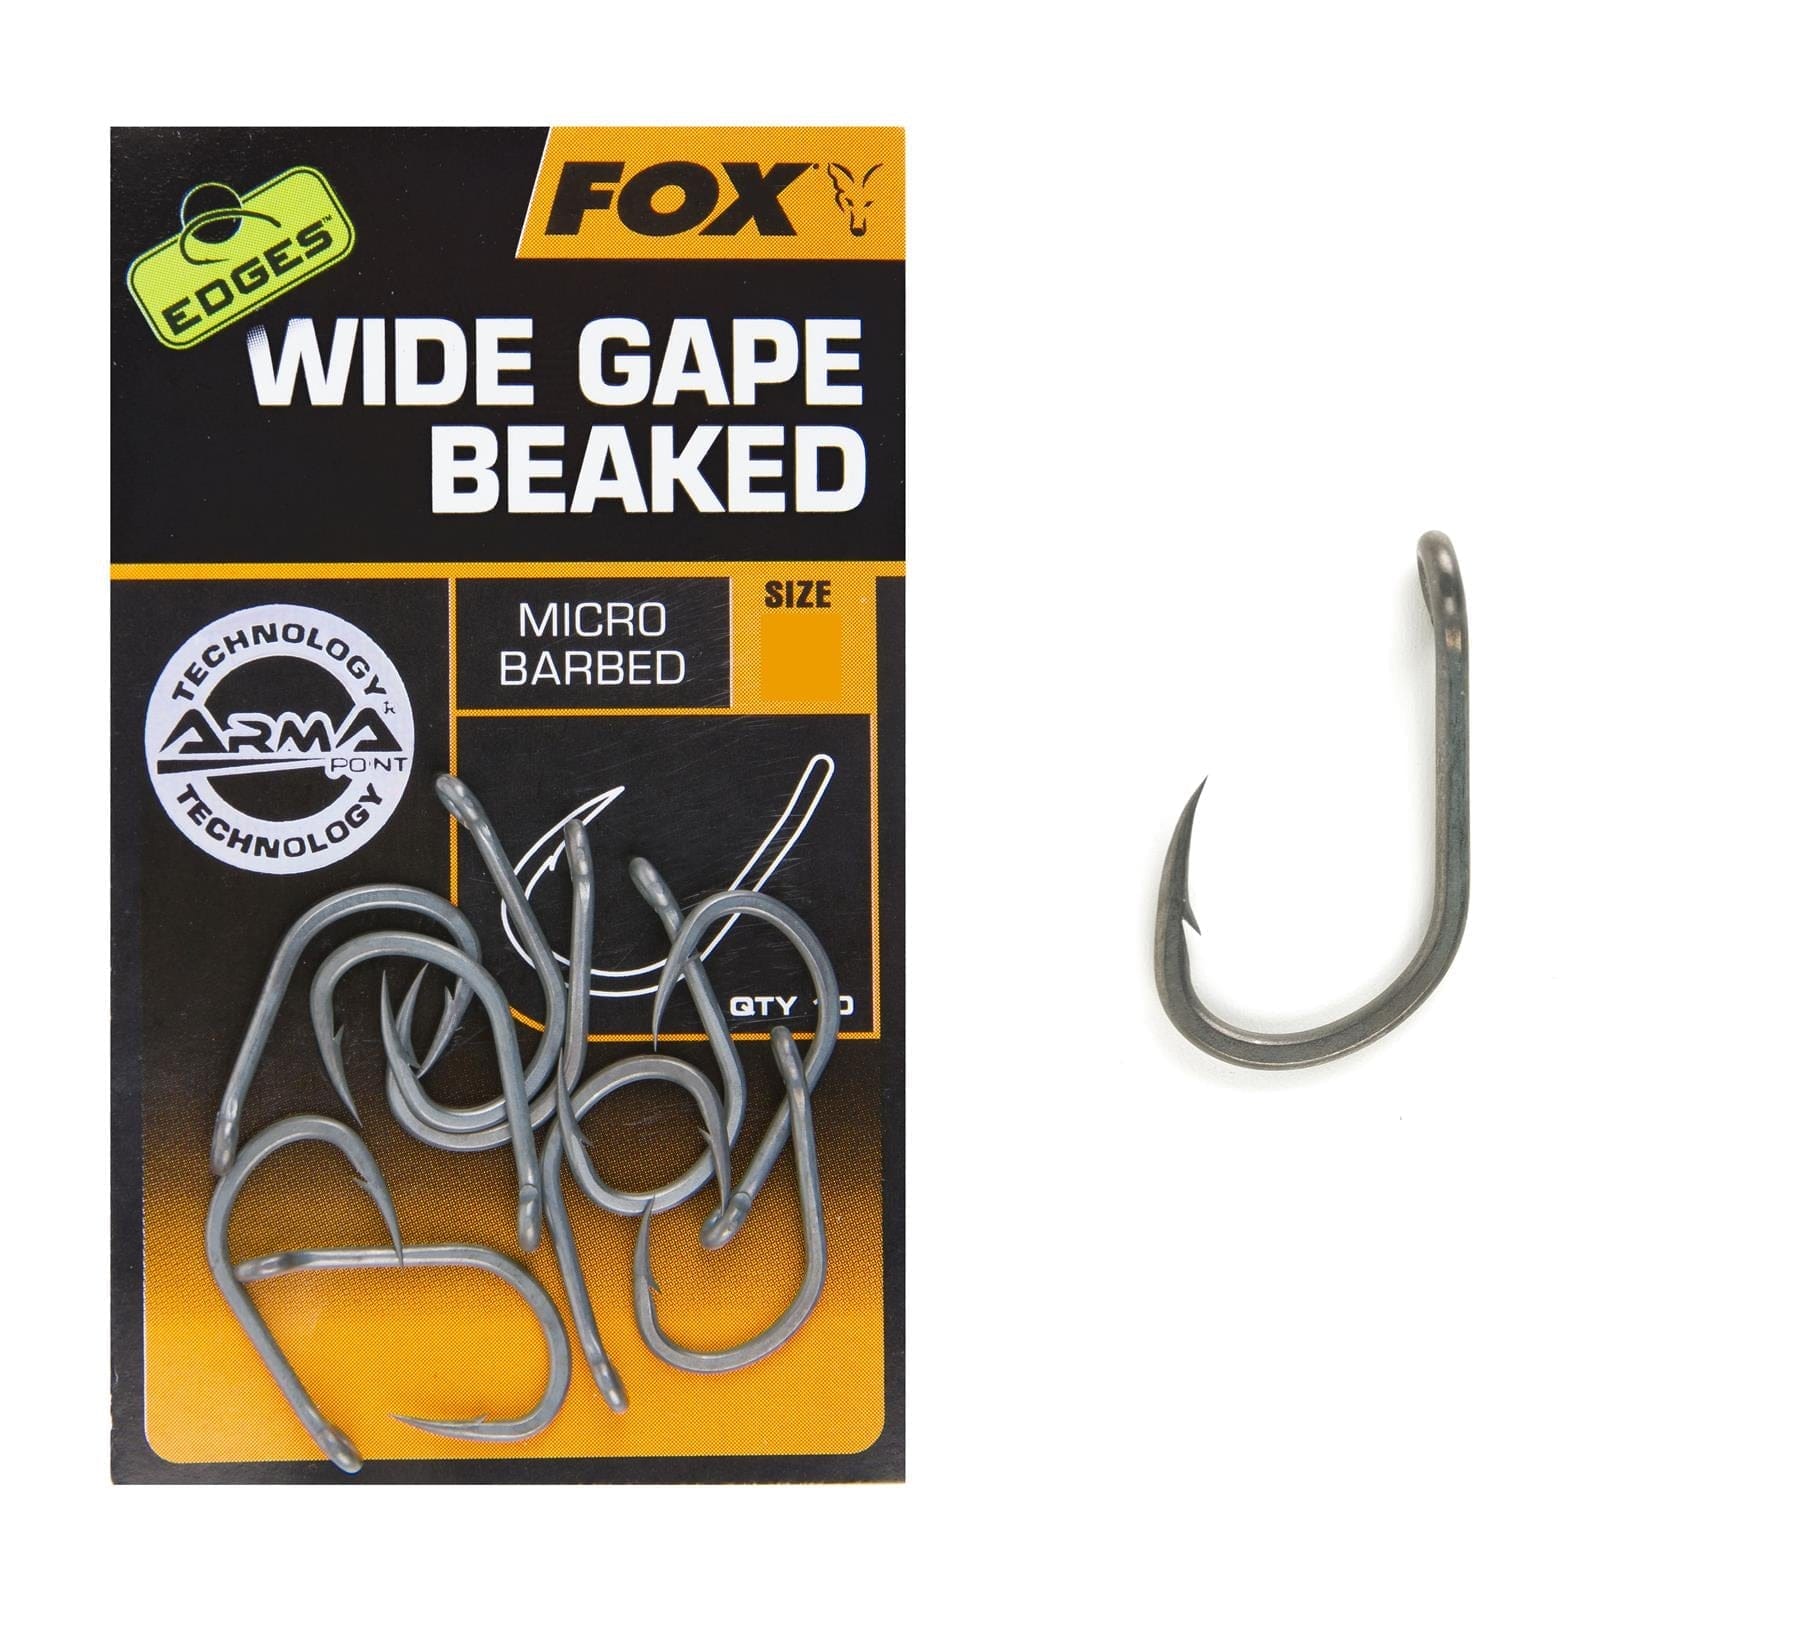 FOX Edges Armapoint Wide Gape Beaked Hooks - Micro Barbed.